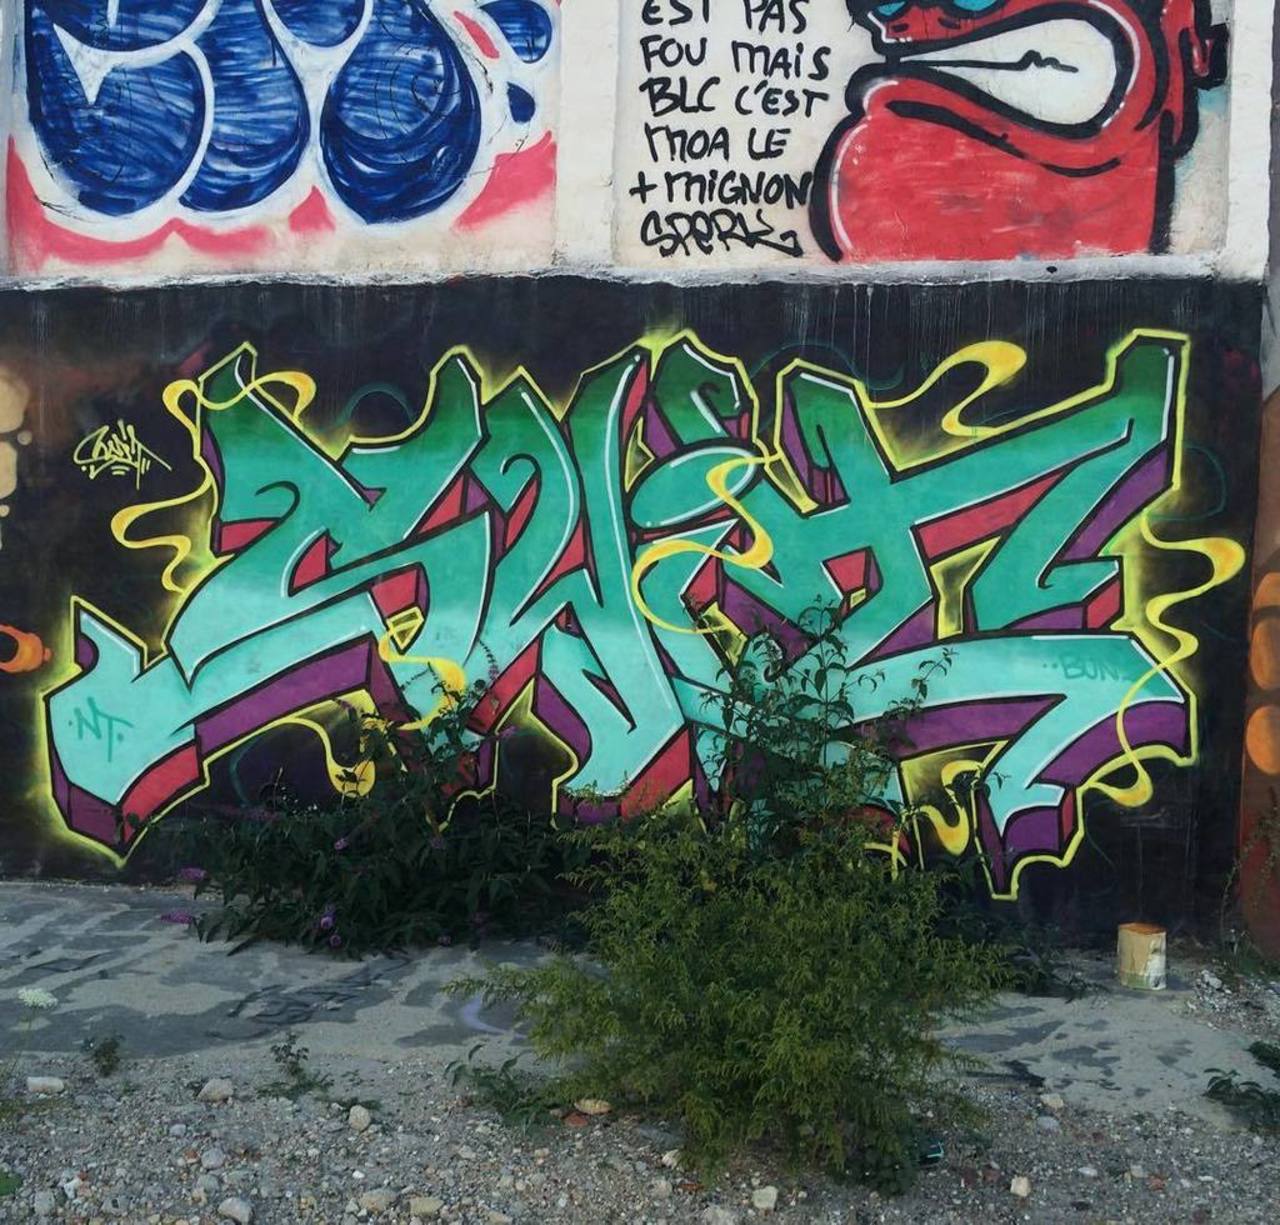 via #insta_fdy "http://bit.ly/1VyhBZL" #graffiti #streetart http://t.co/oh2YkGPiI1